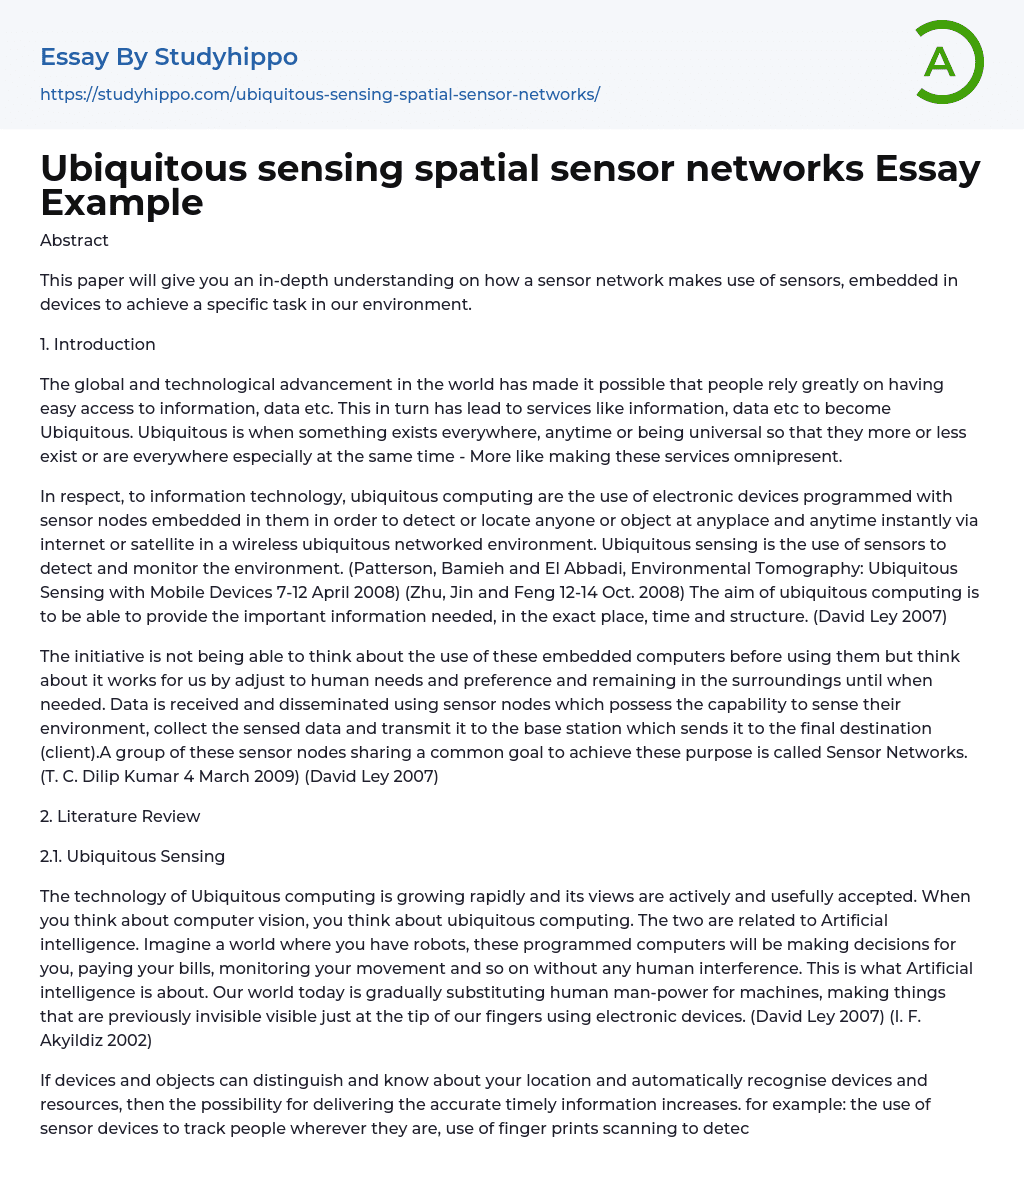 Ubiquitous sensing spatial sensor networks Essay Example